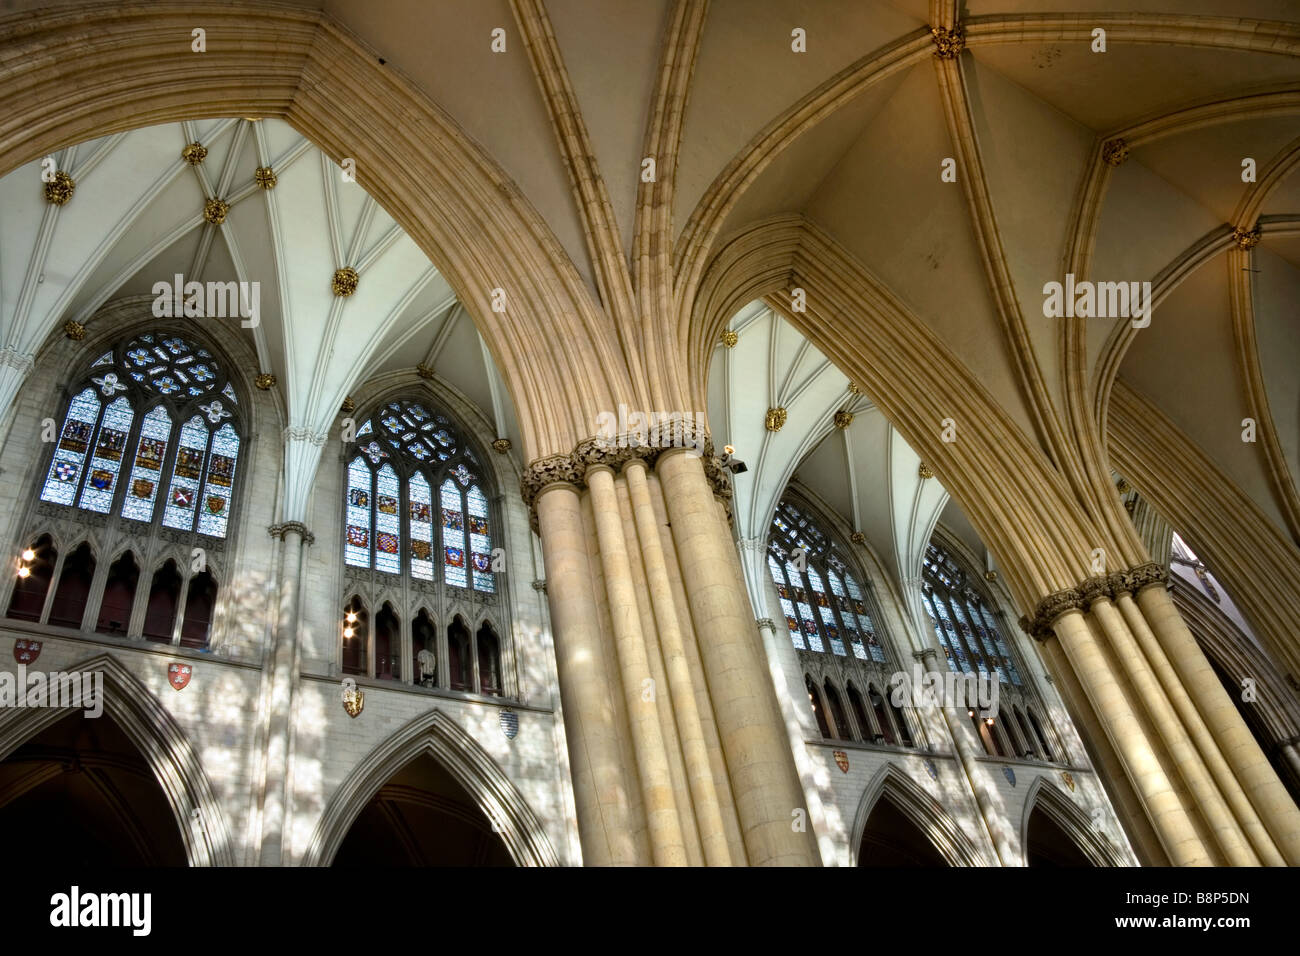 An interior view of York Minster, York, England Stock Photo